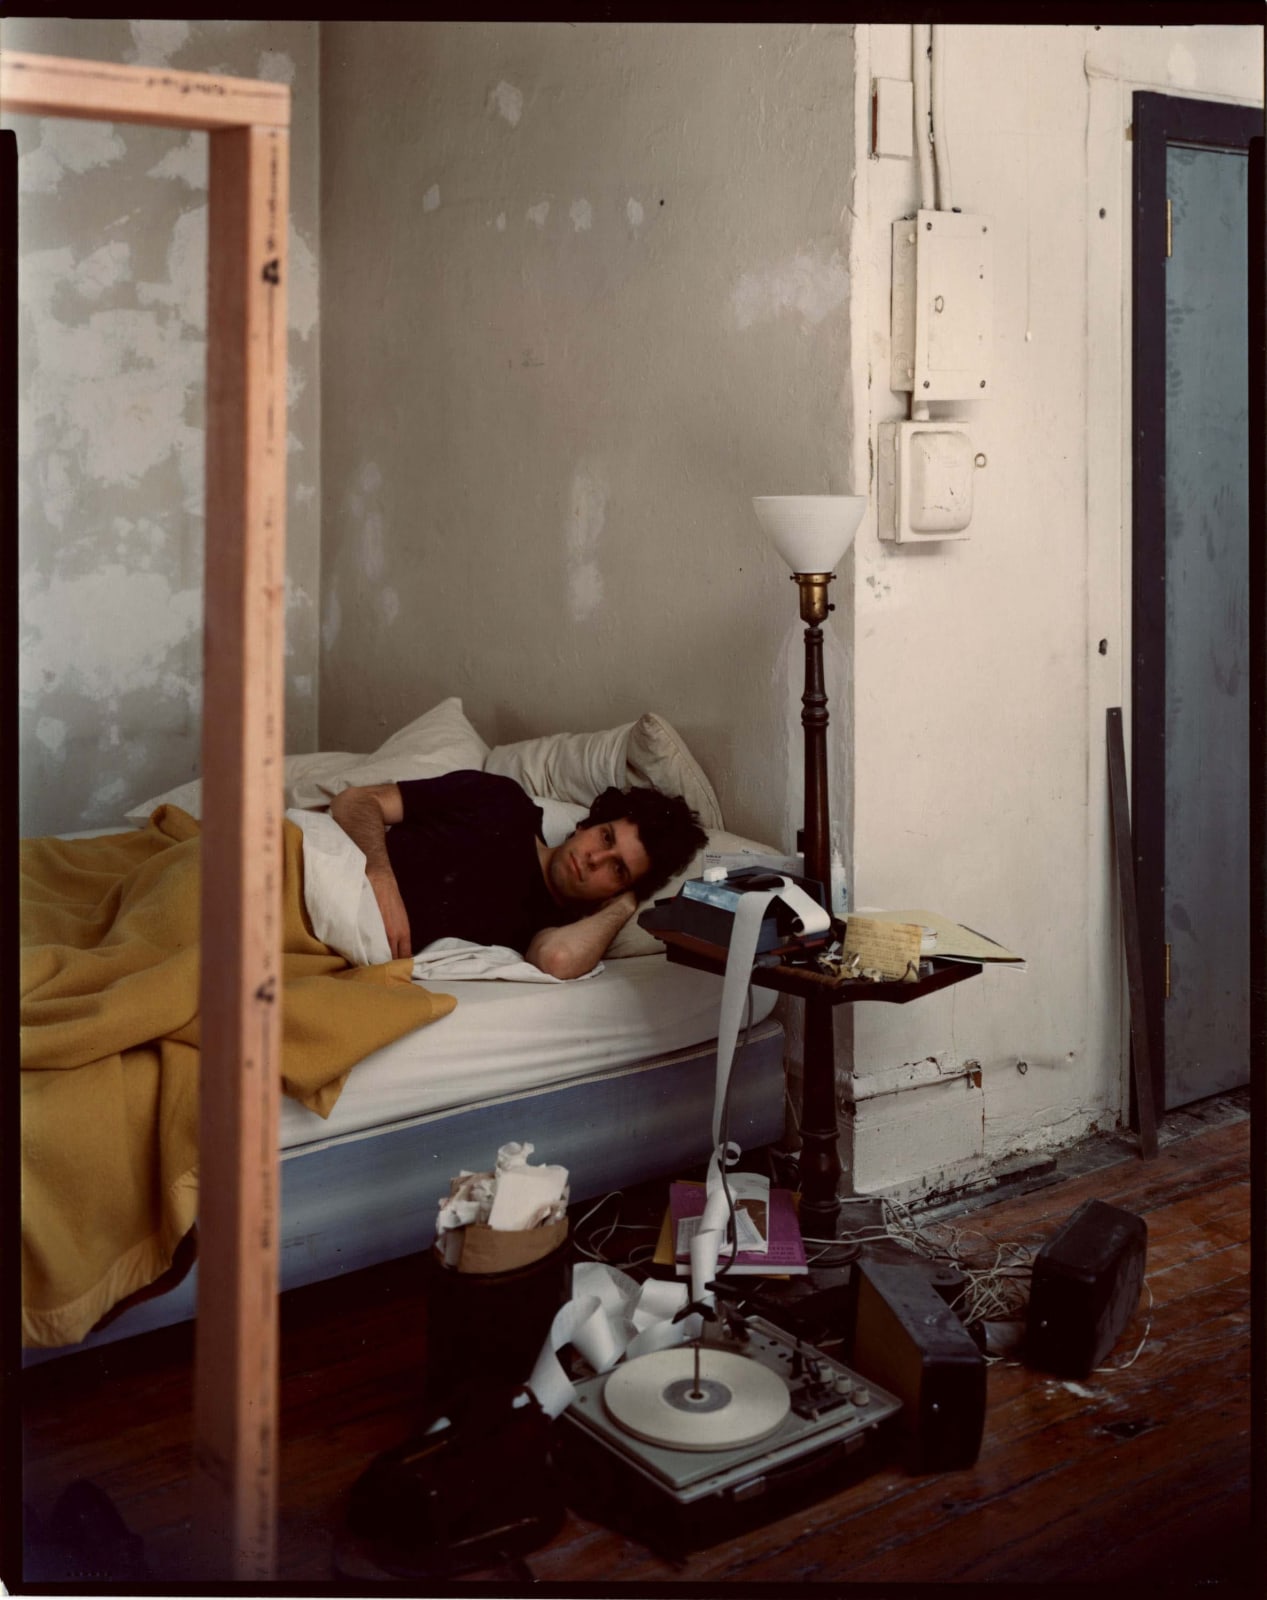 Stephen Shore, Self-portrait, New York, New York, March 20, 1976